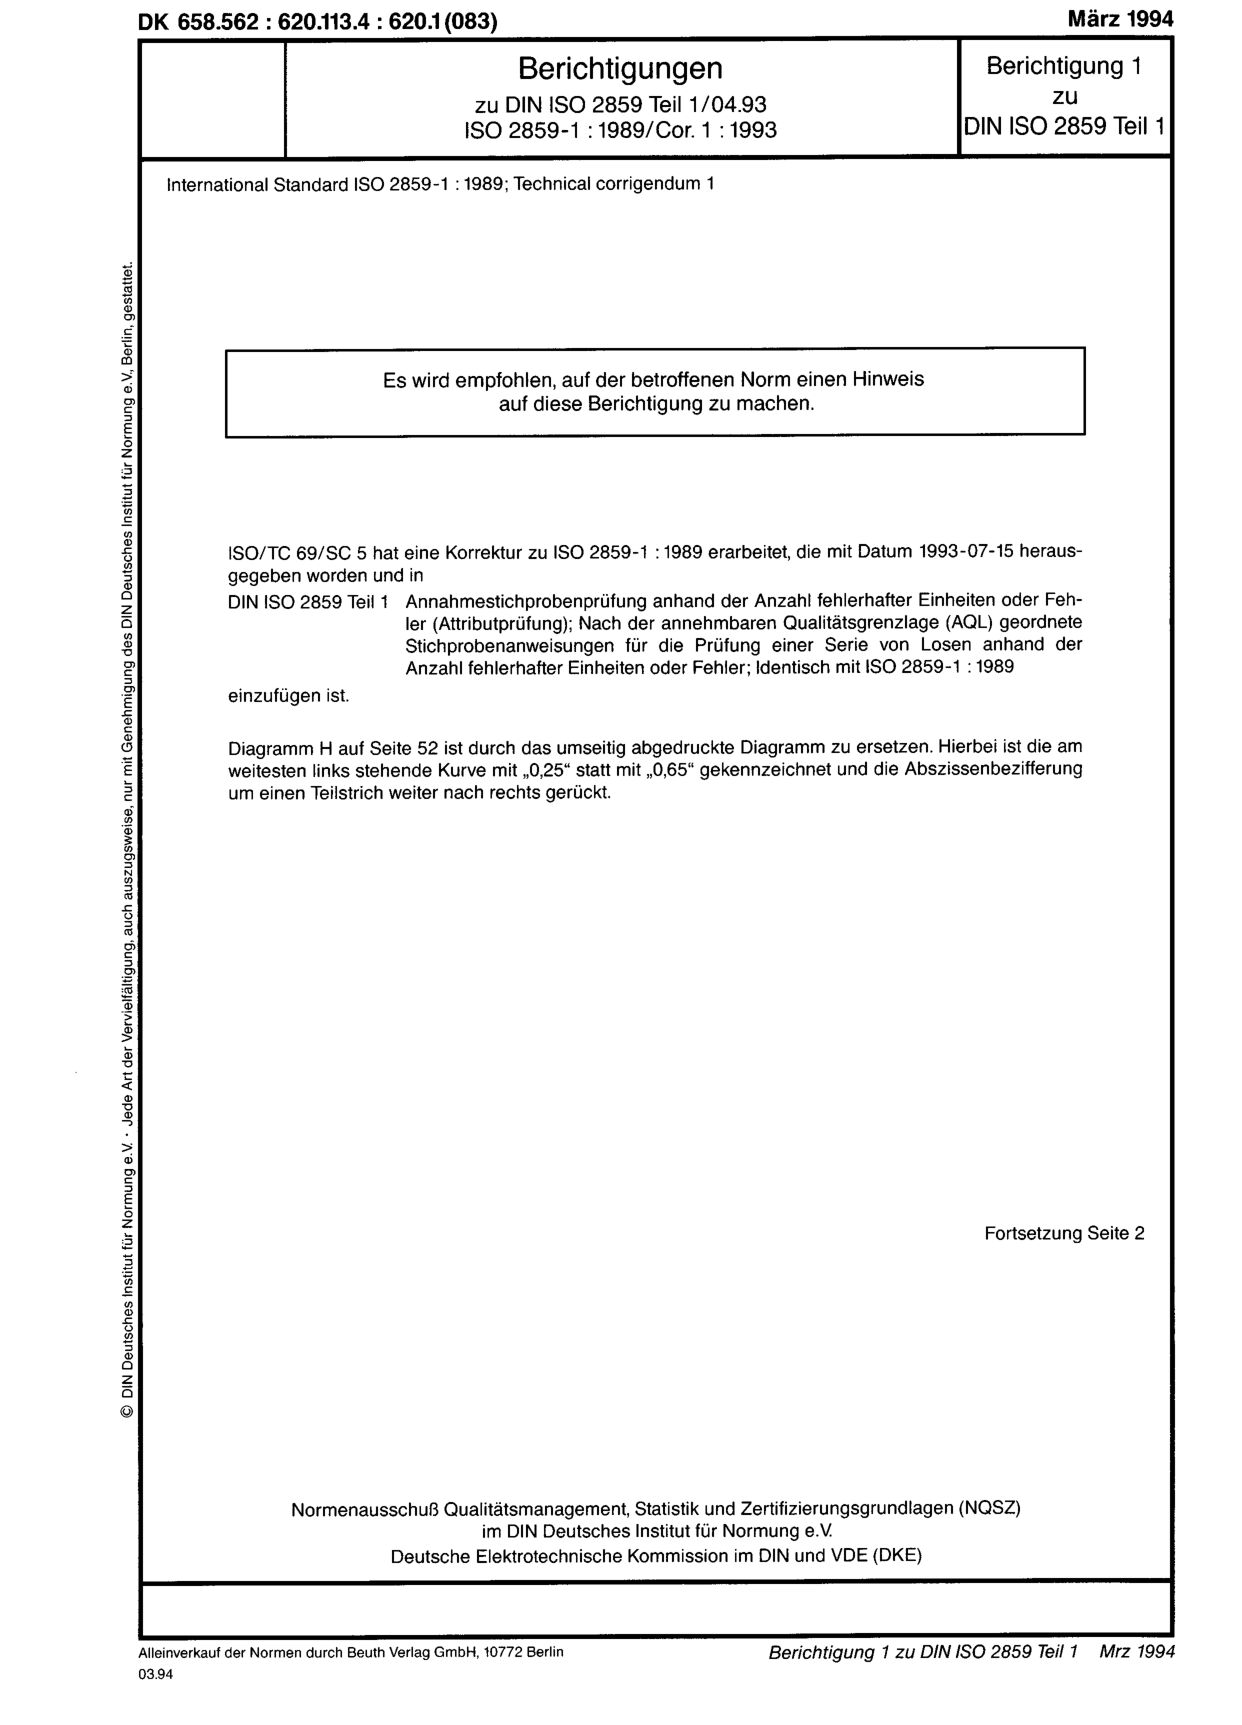 DIN ISO 2859-1 Berichtigung 1:1994-03封面图